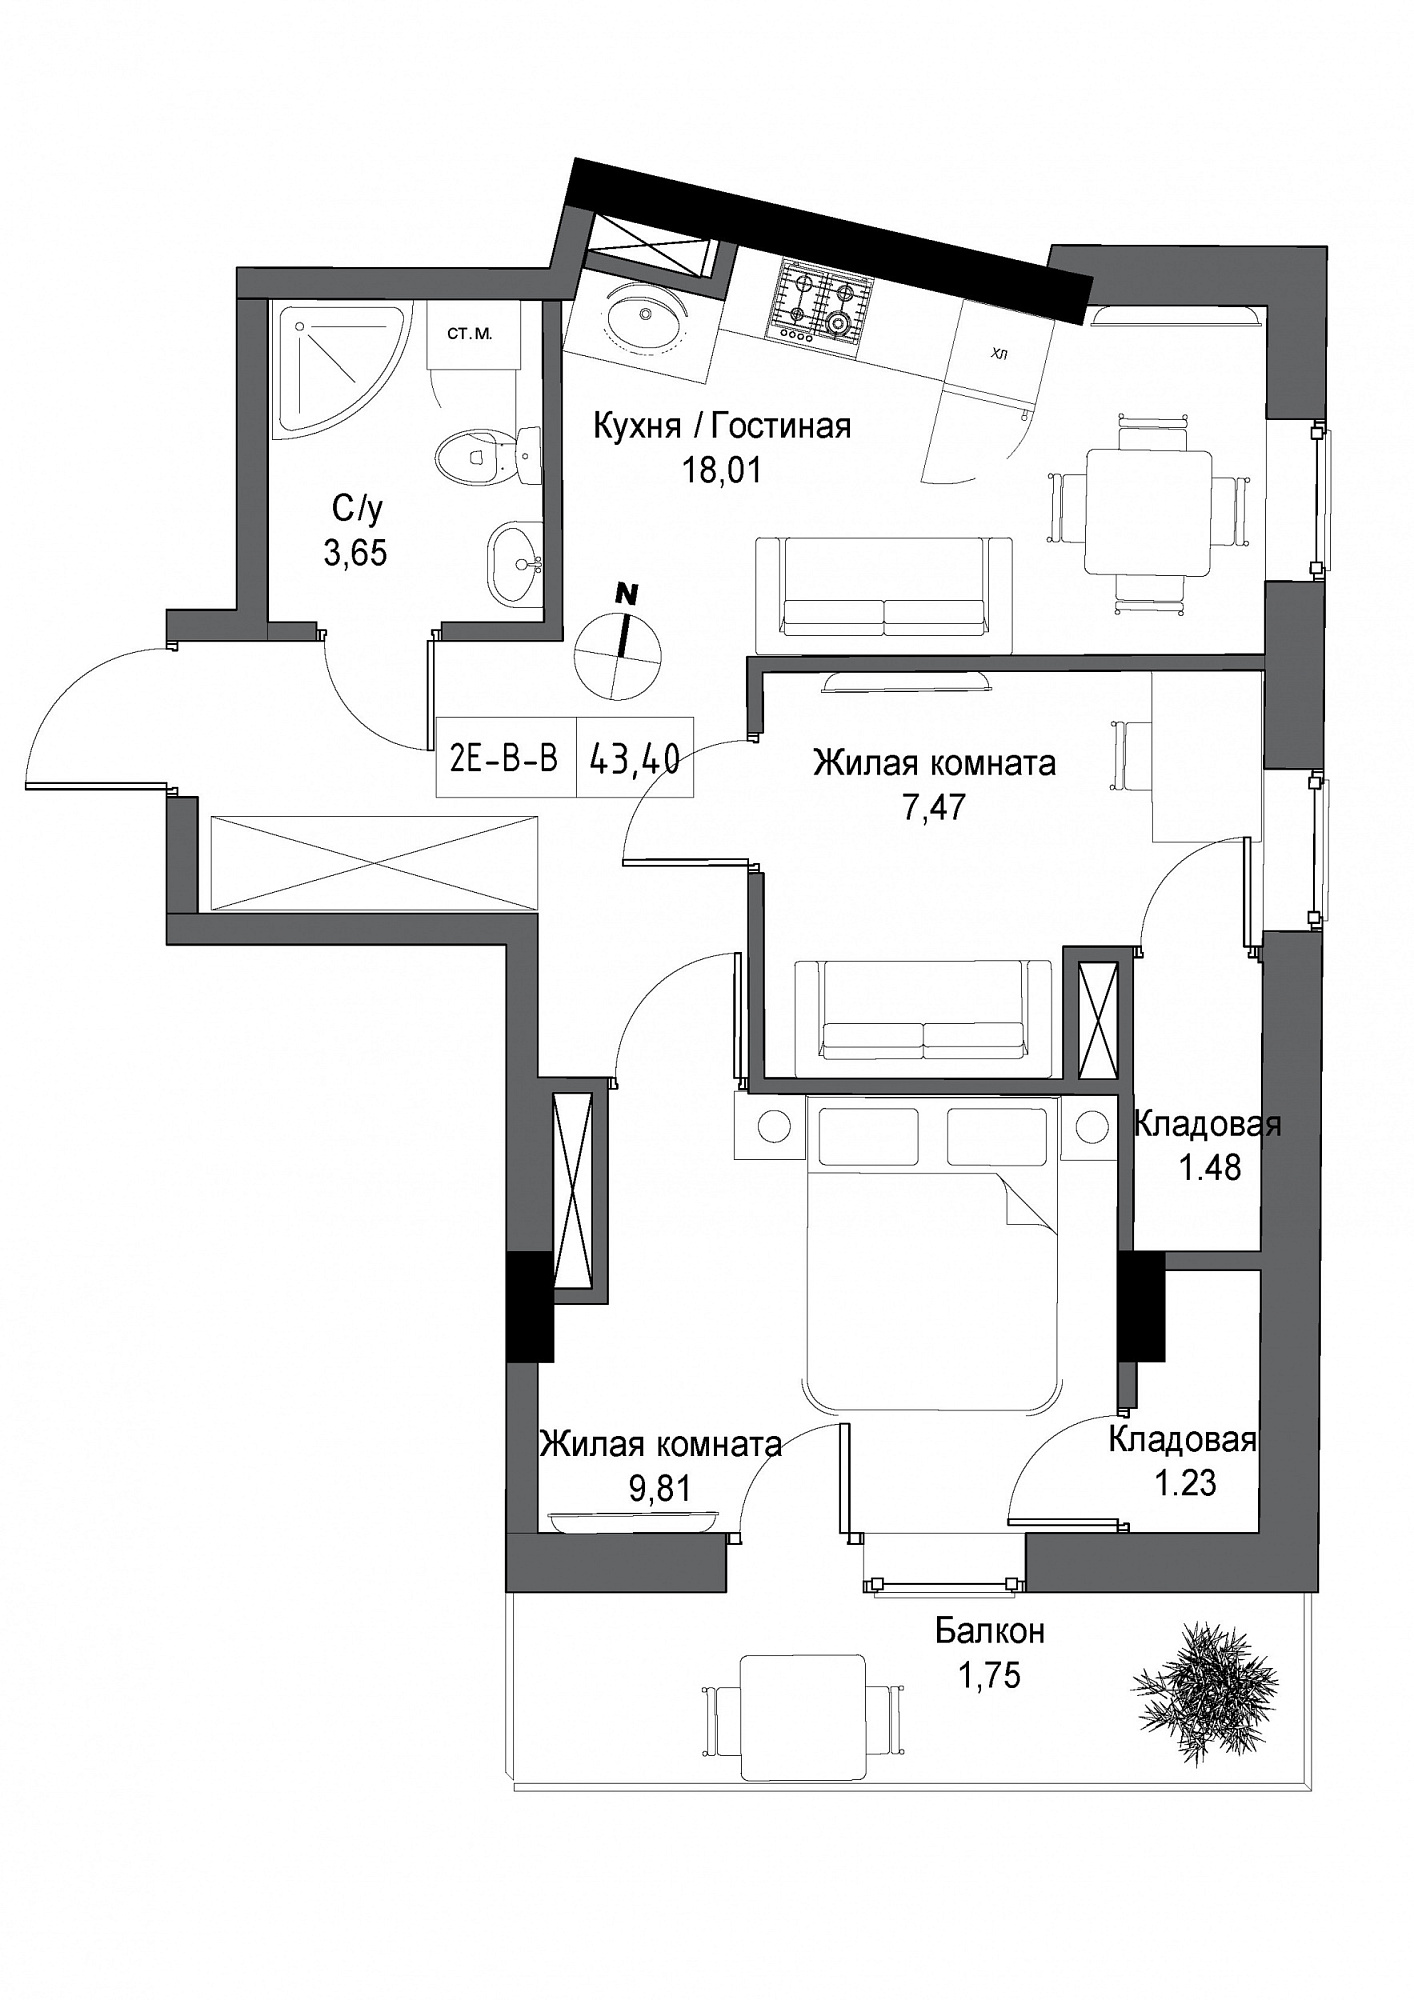 Планування 2-к квартира площею 43.4м2, UM-004-09/0010.